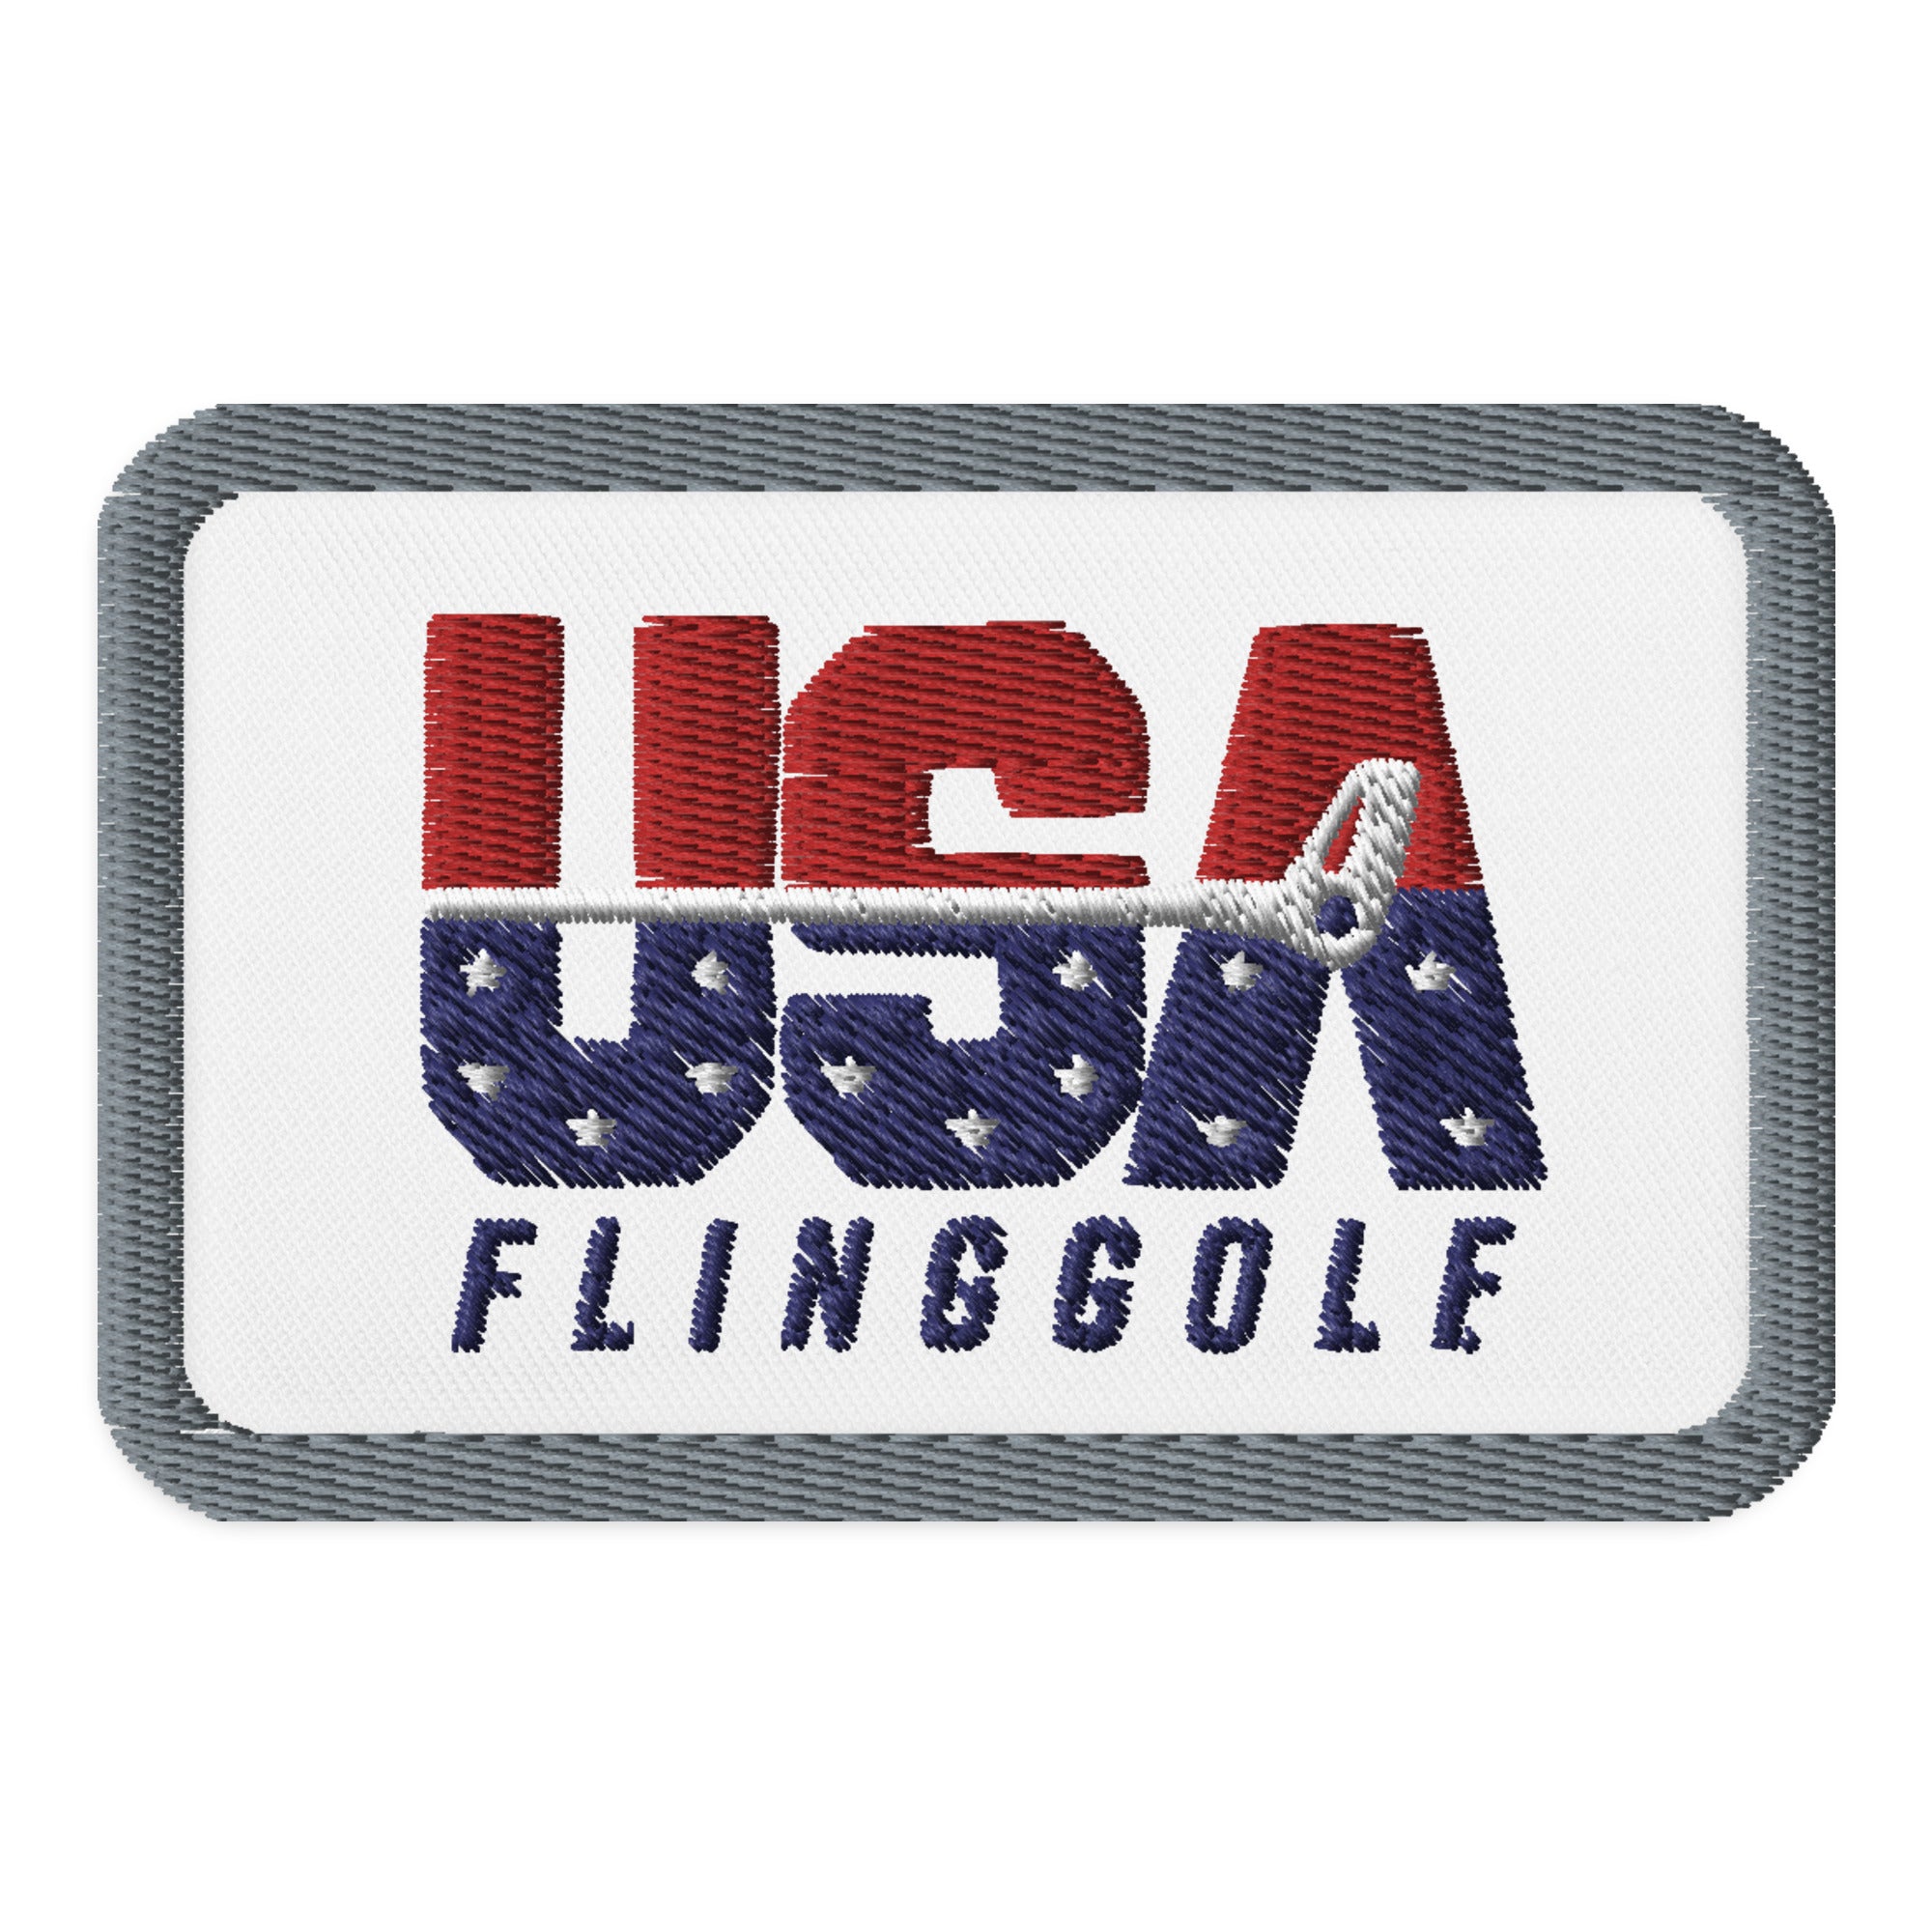 USA FlingGolf Rectangle Patch (Grey Border on White)